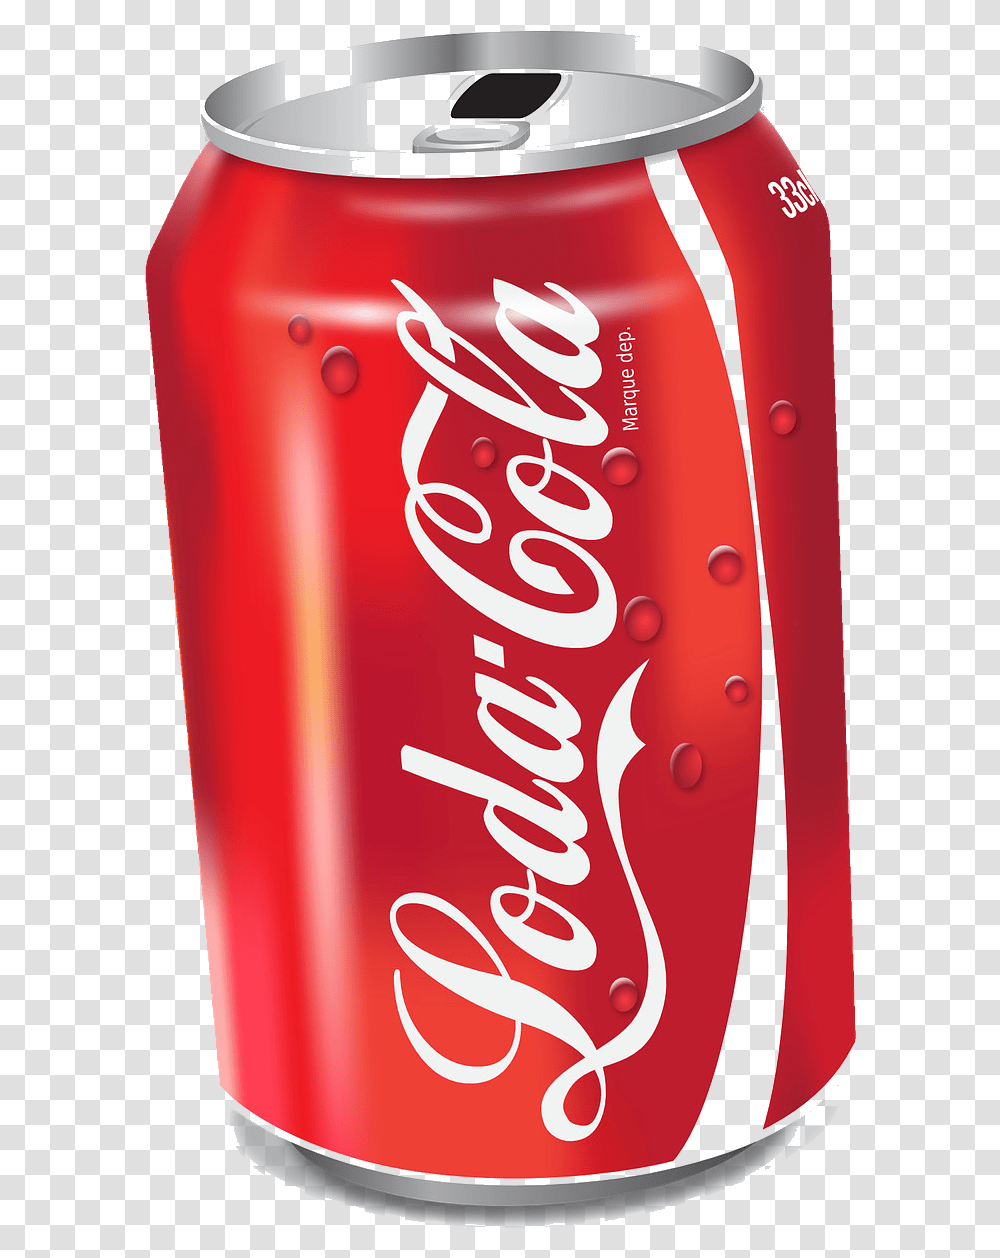 Soda Can Drink Beer Food Image Clipart Picsart Coca Cola, Coke, Beverage Transparent Png